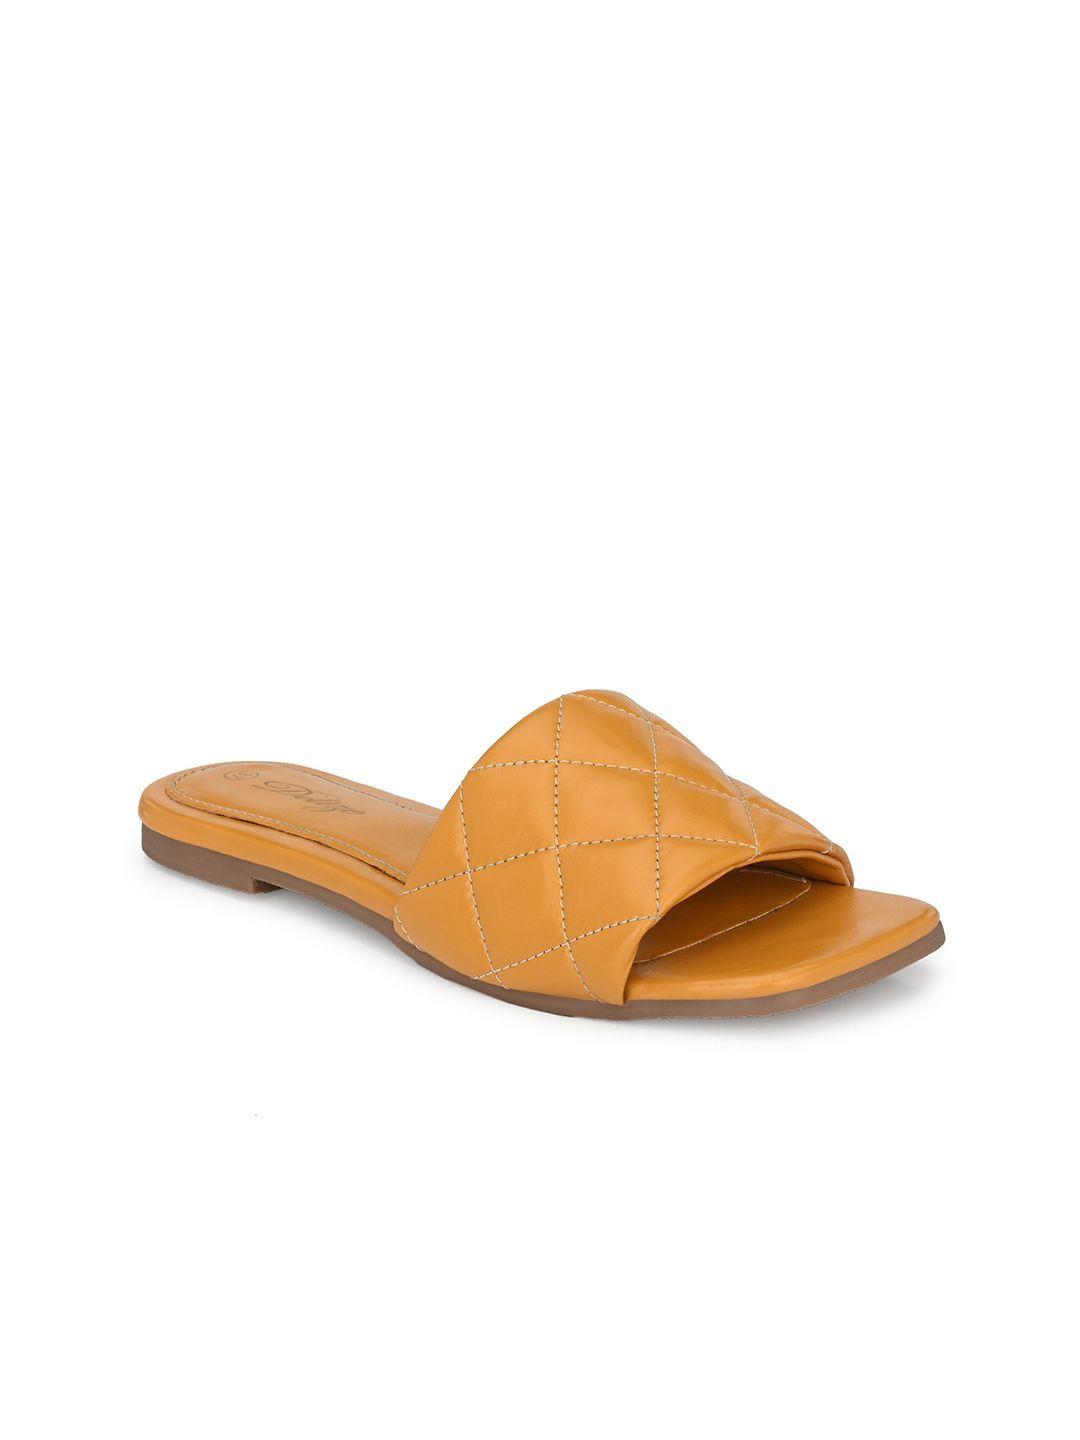 delize women yellow flats sandals